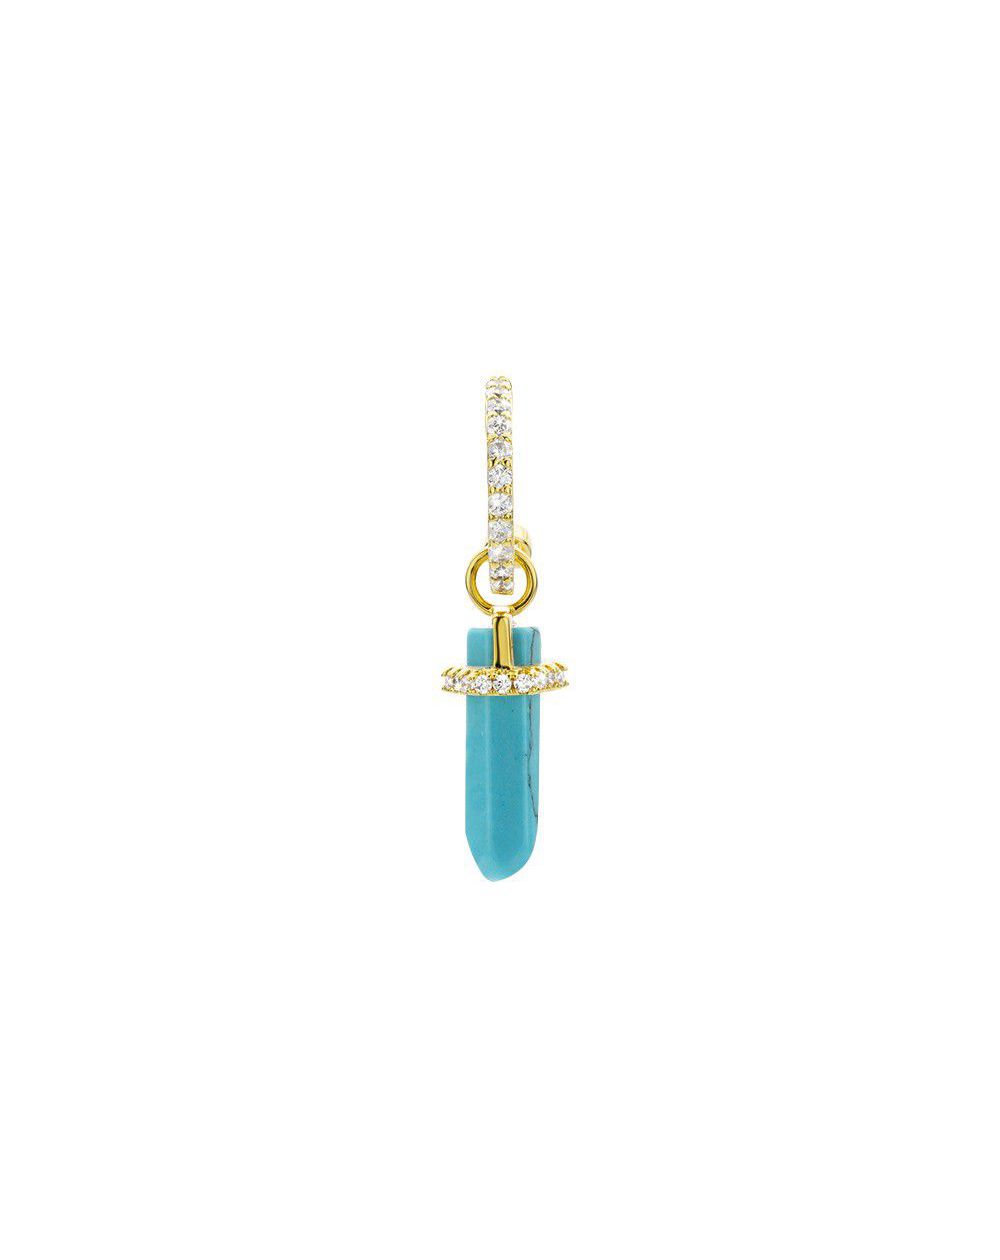 Boucle d'oreille MYA BAY Turquoise Crystal - BO-182-1 - Mya Bay